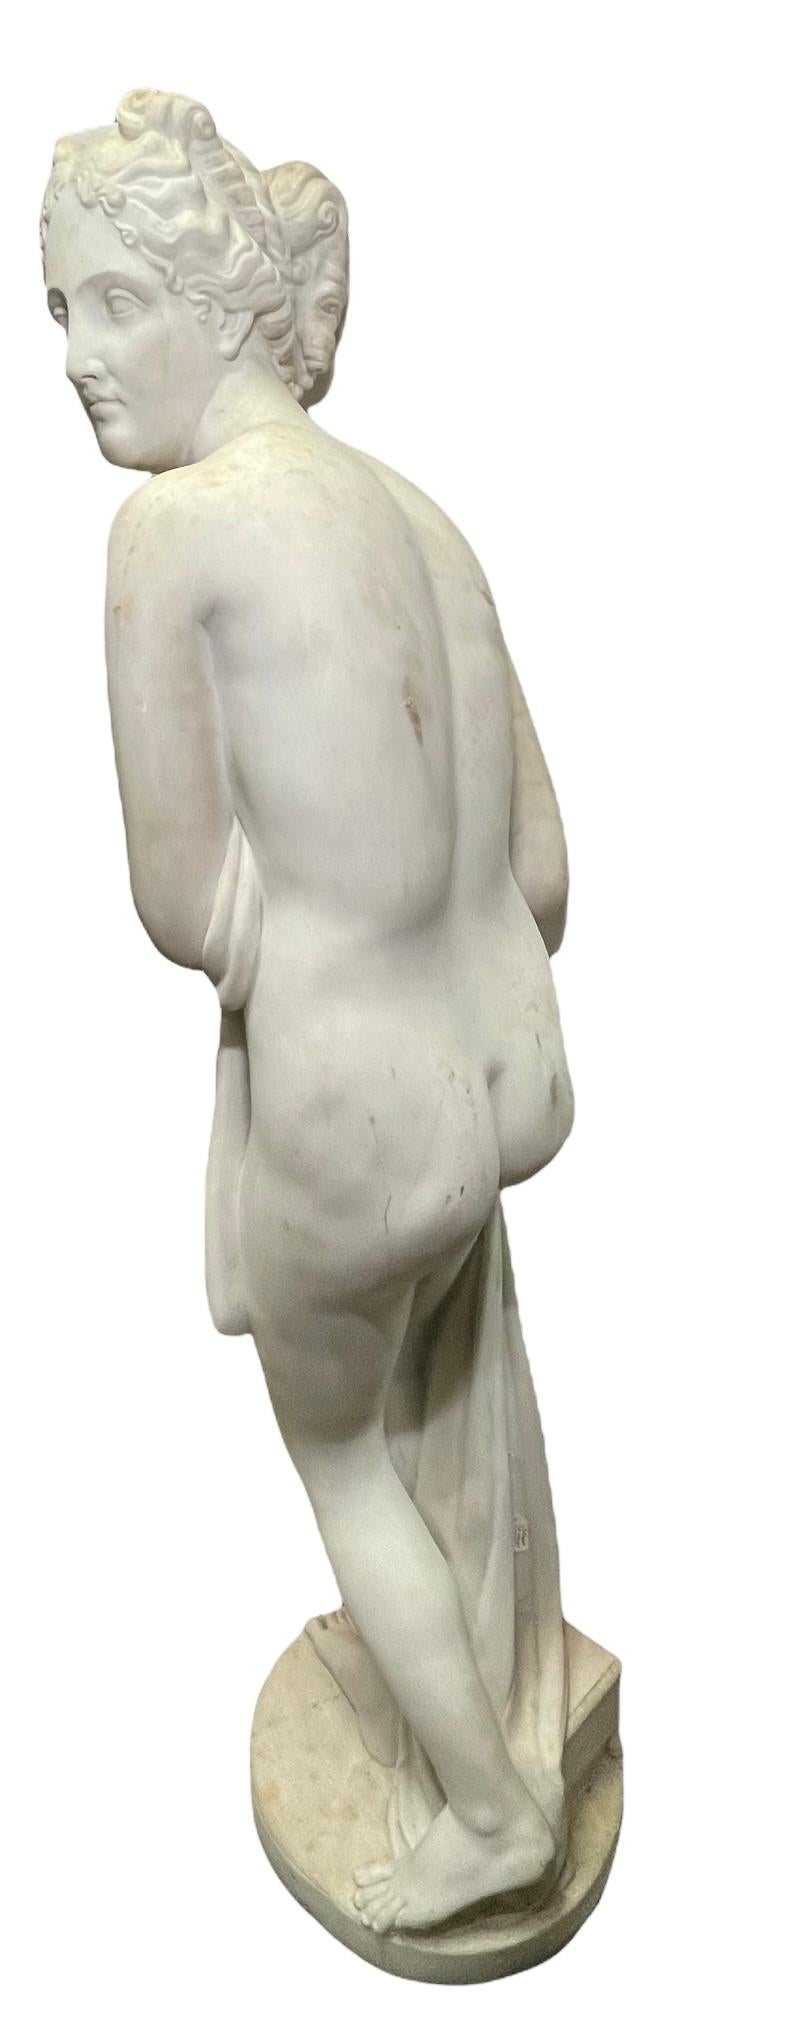 Cast Life Size Marble Sculpture of Venus After “La Venus Italica” For Sale